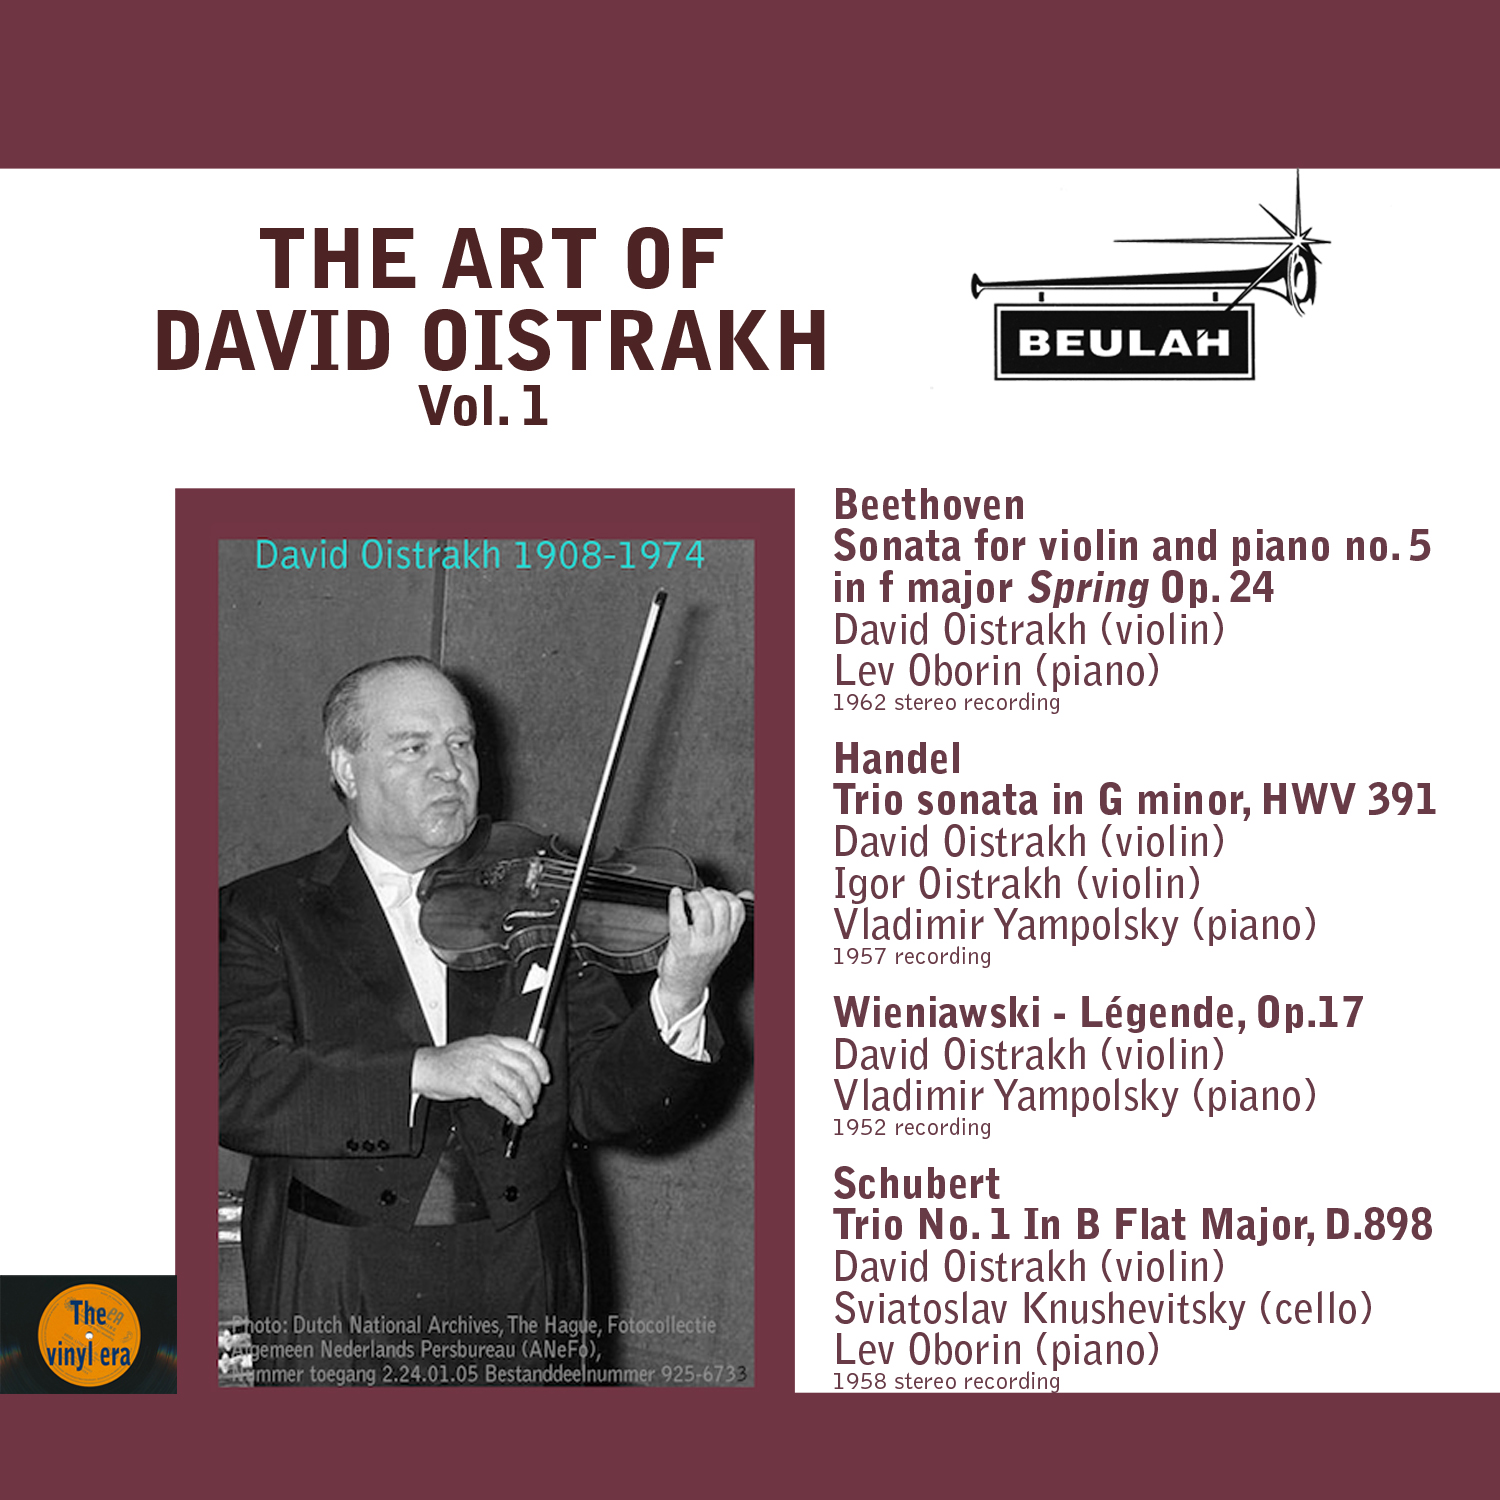 The Art of David Oistrakh, Vol. 1